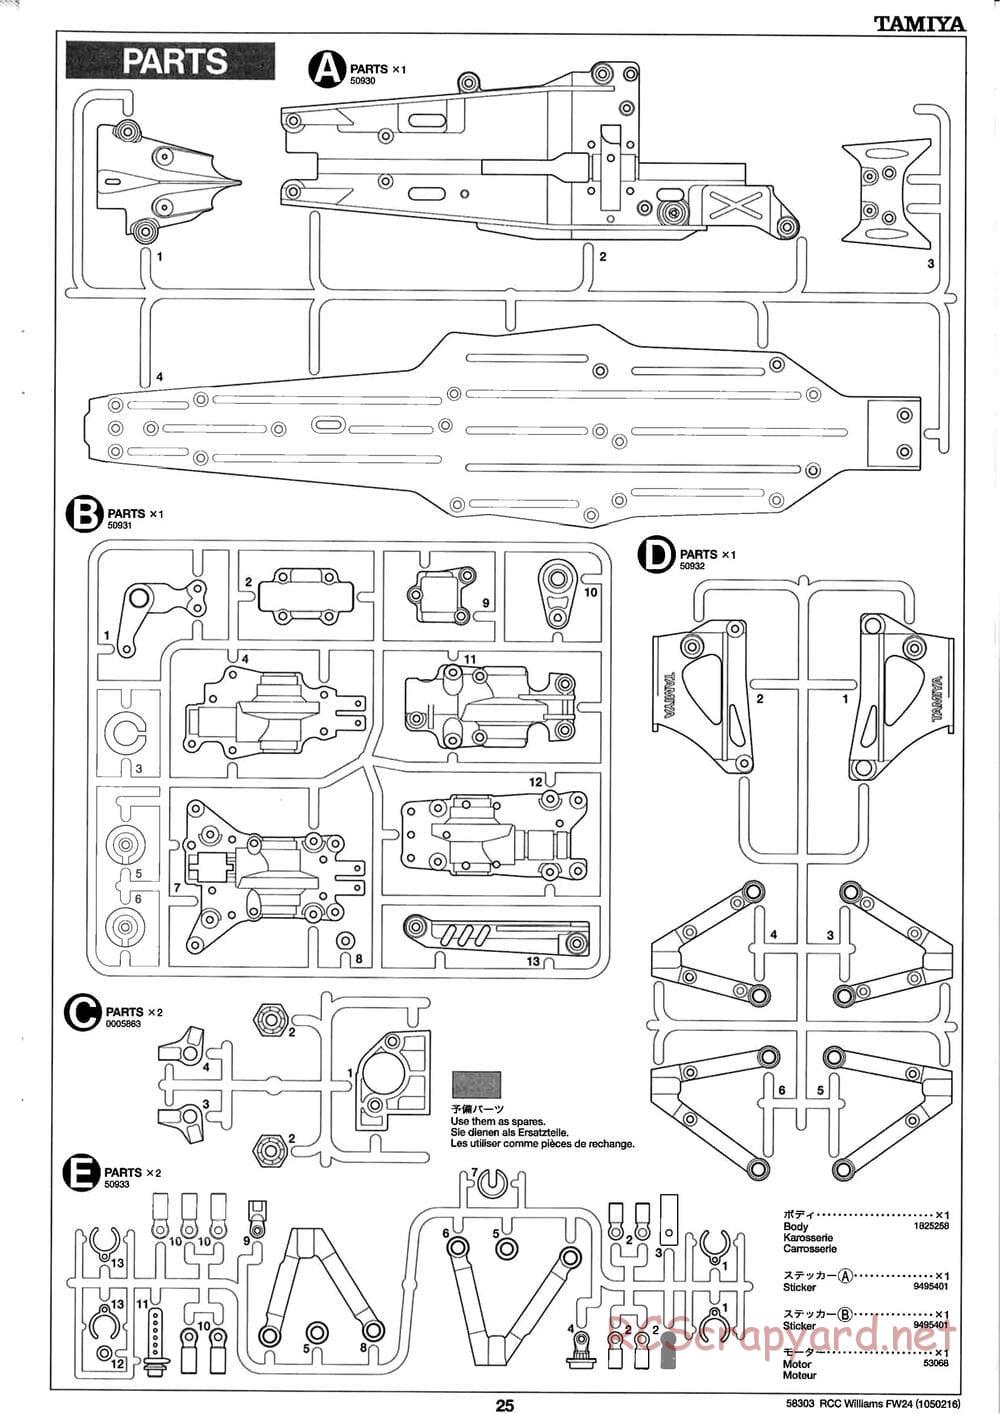 Tamiya - Williams F1 BMW FW24 - F201 Chassis - Manual - Page 25